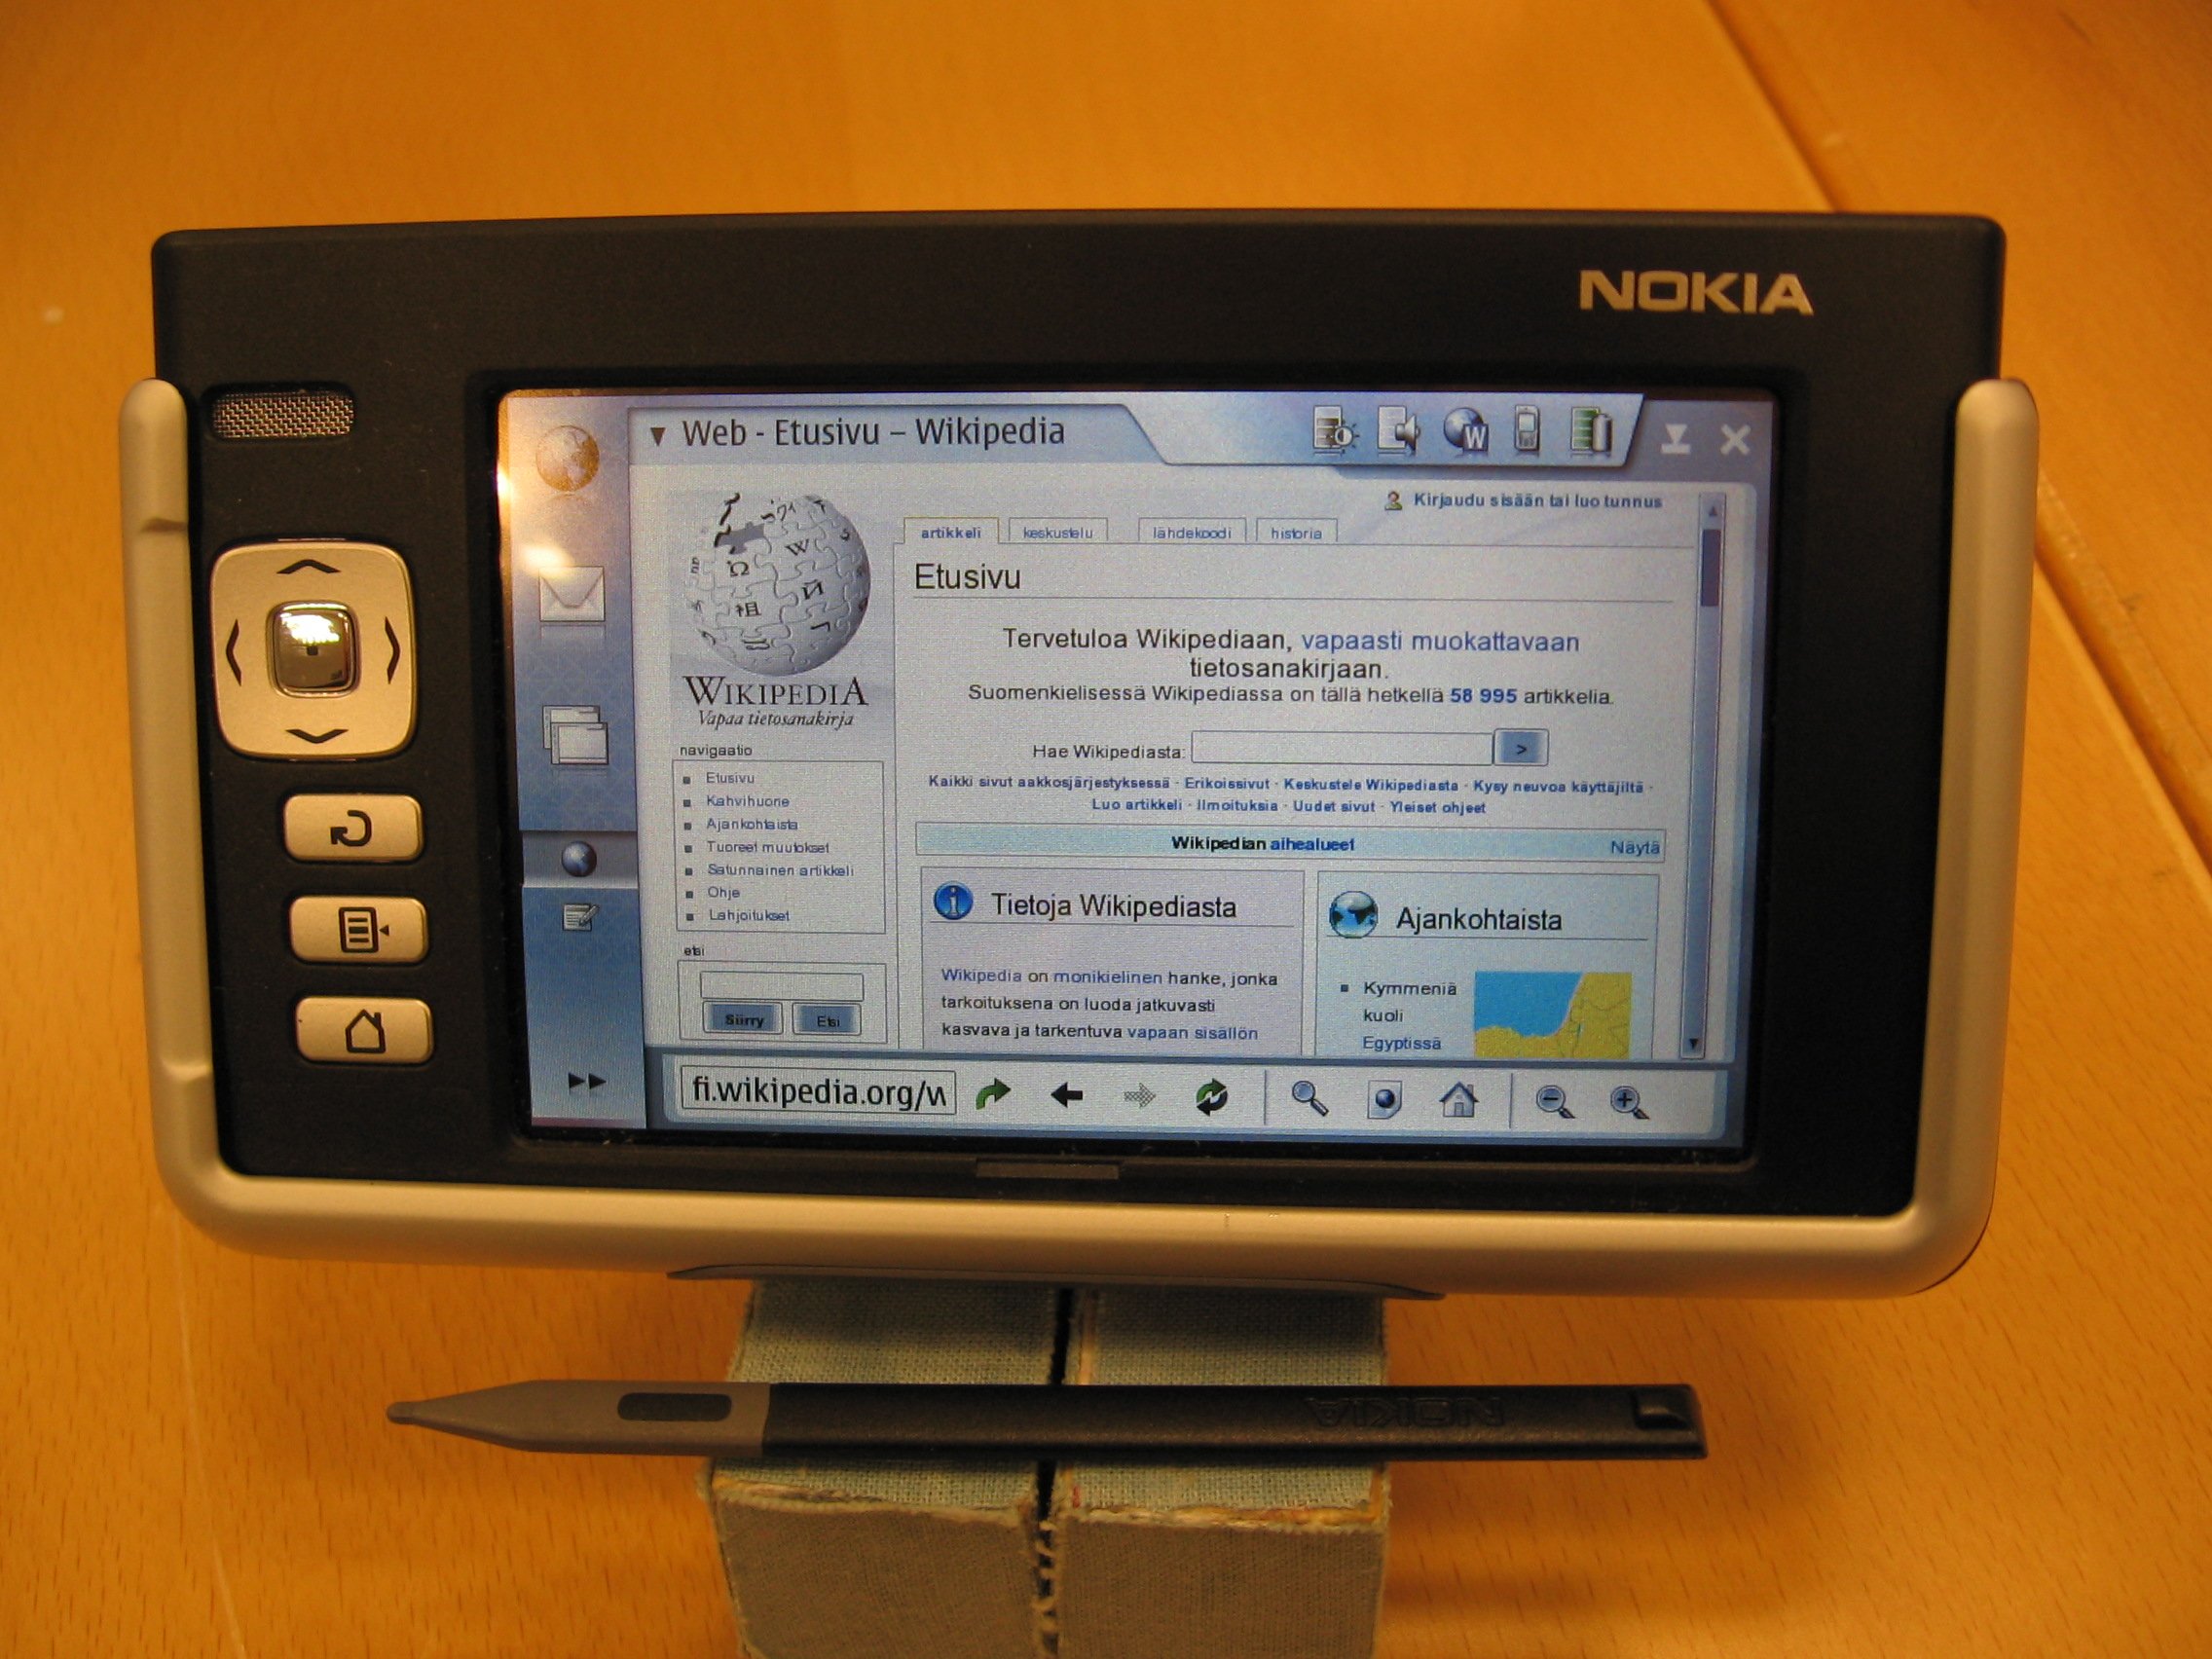 Nokia N900 announced at last.